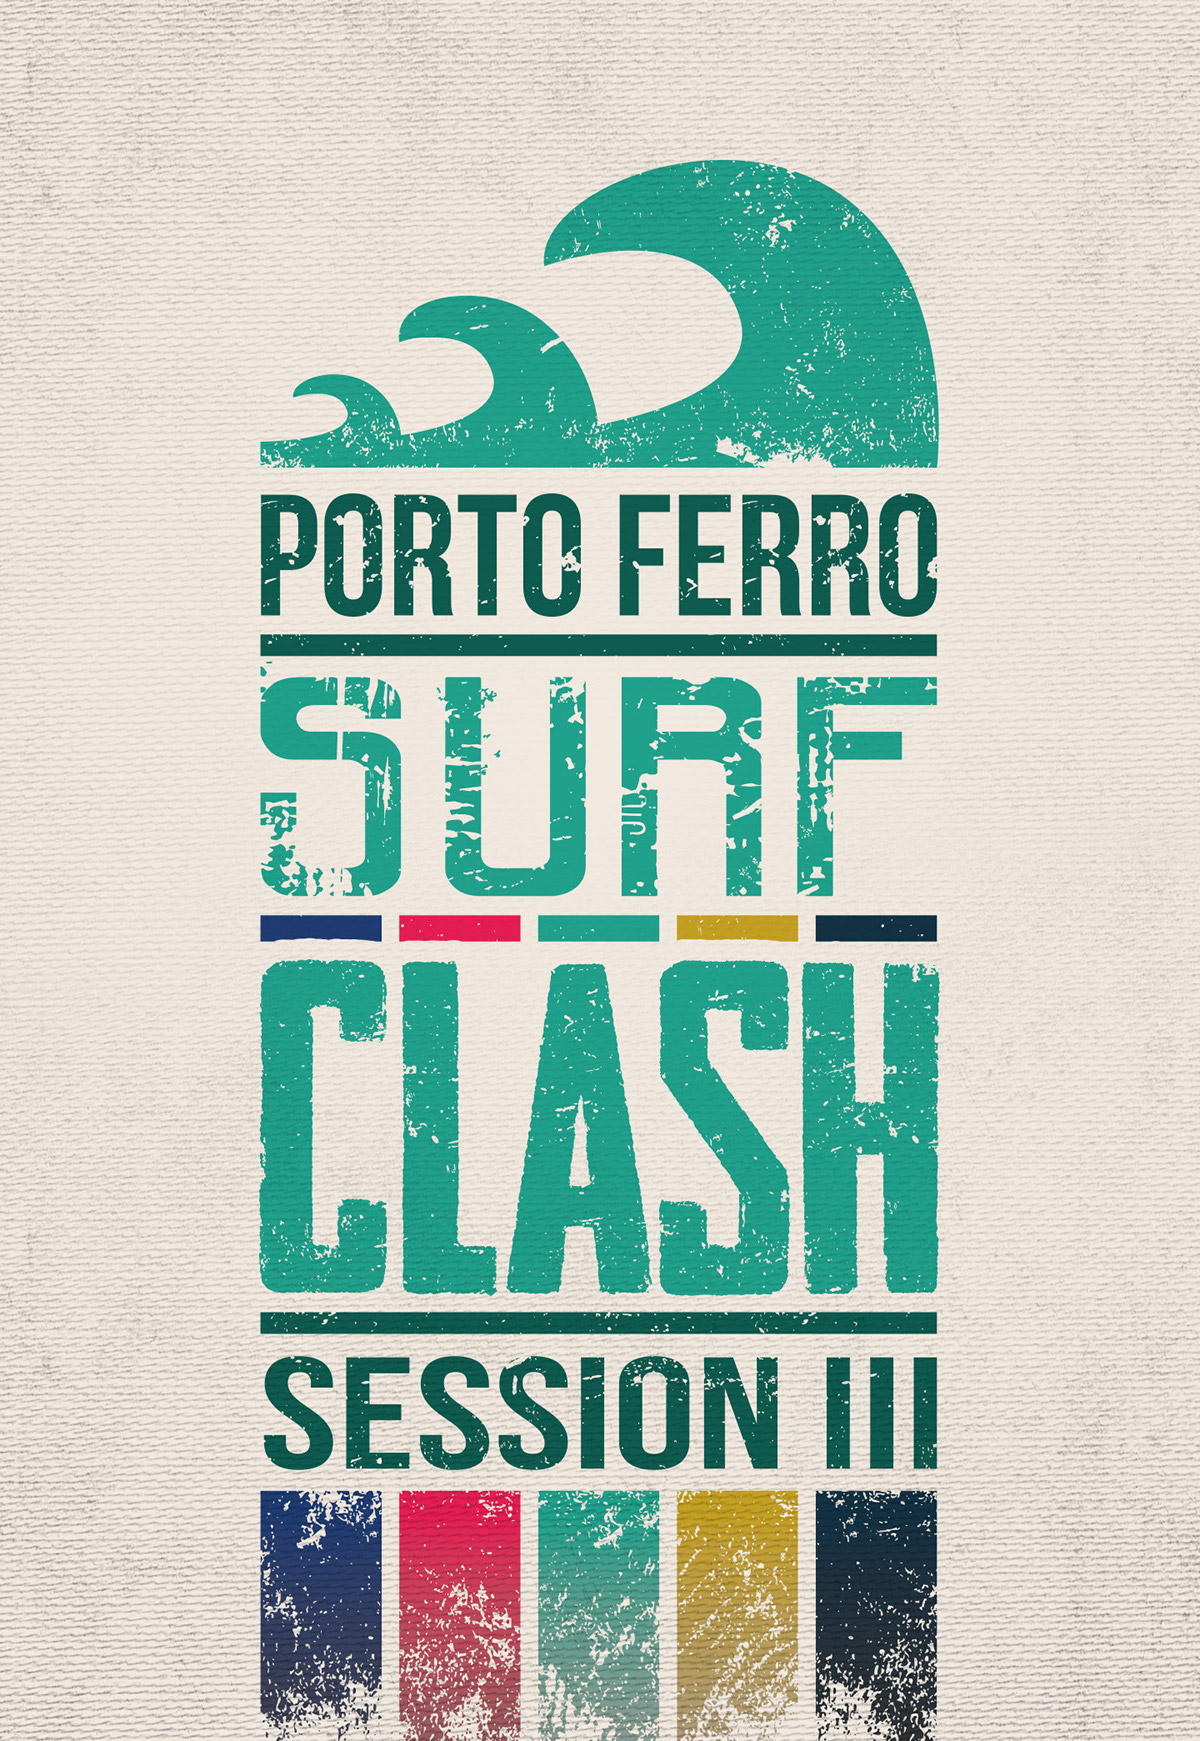 Surf contest graphic-design poster motion-graphics